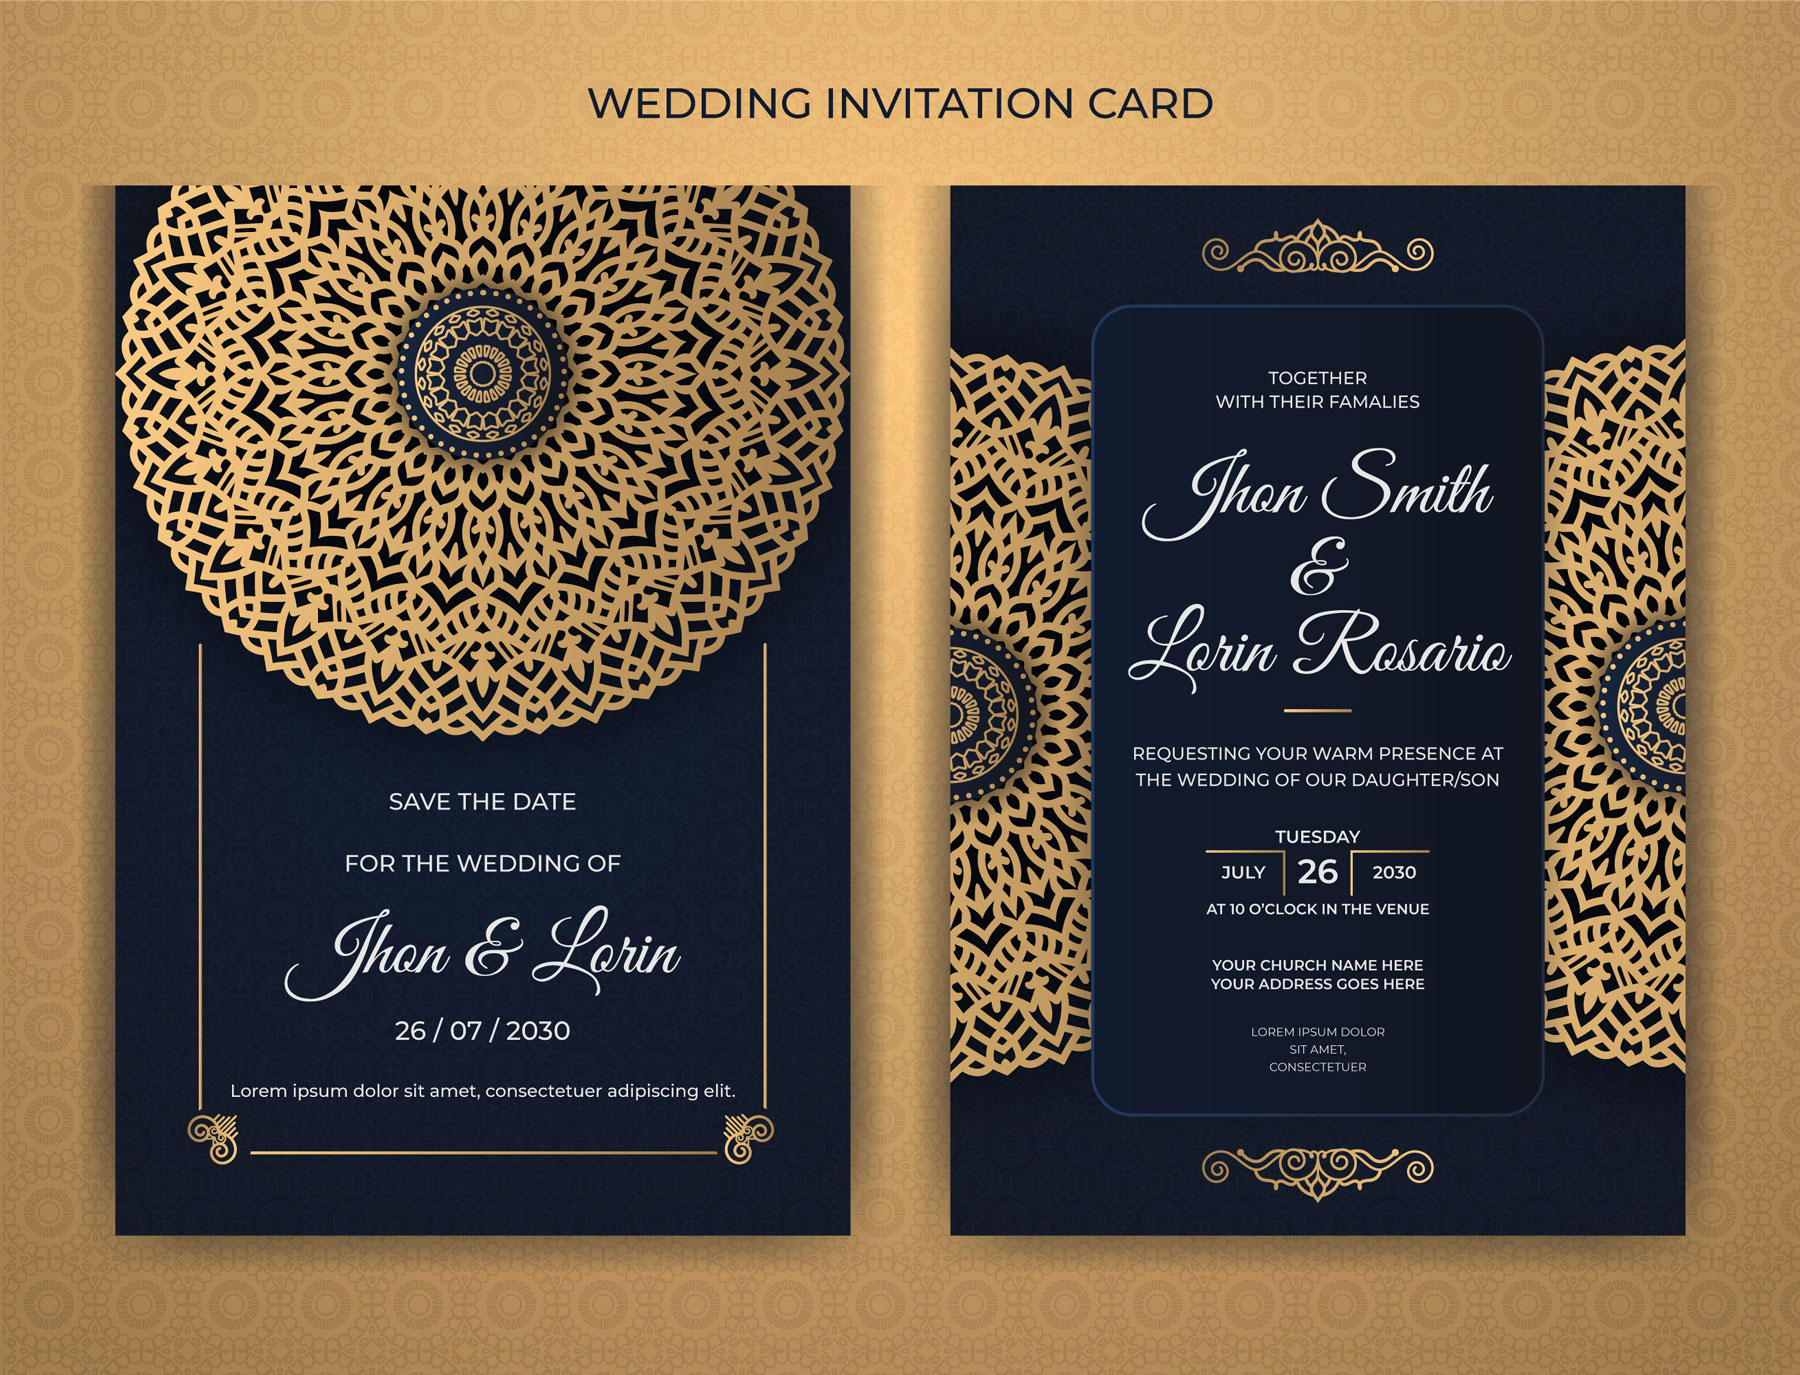 4 In One Luxury Wedding Invitation Card Design for your wedding.